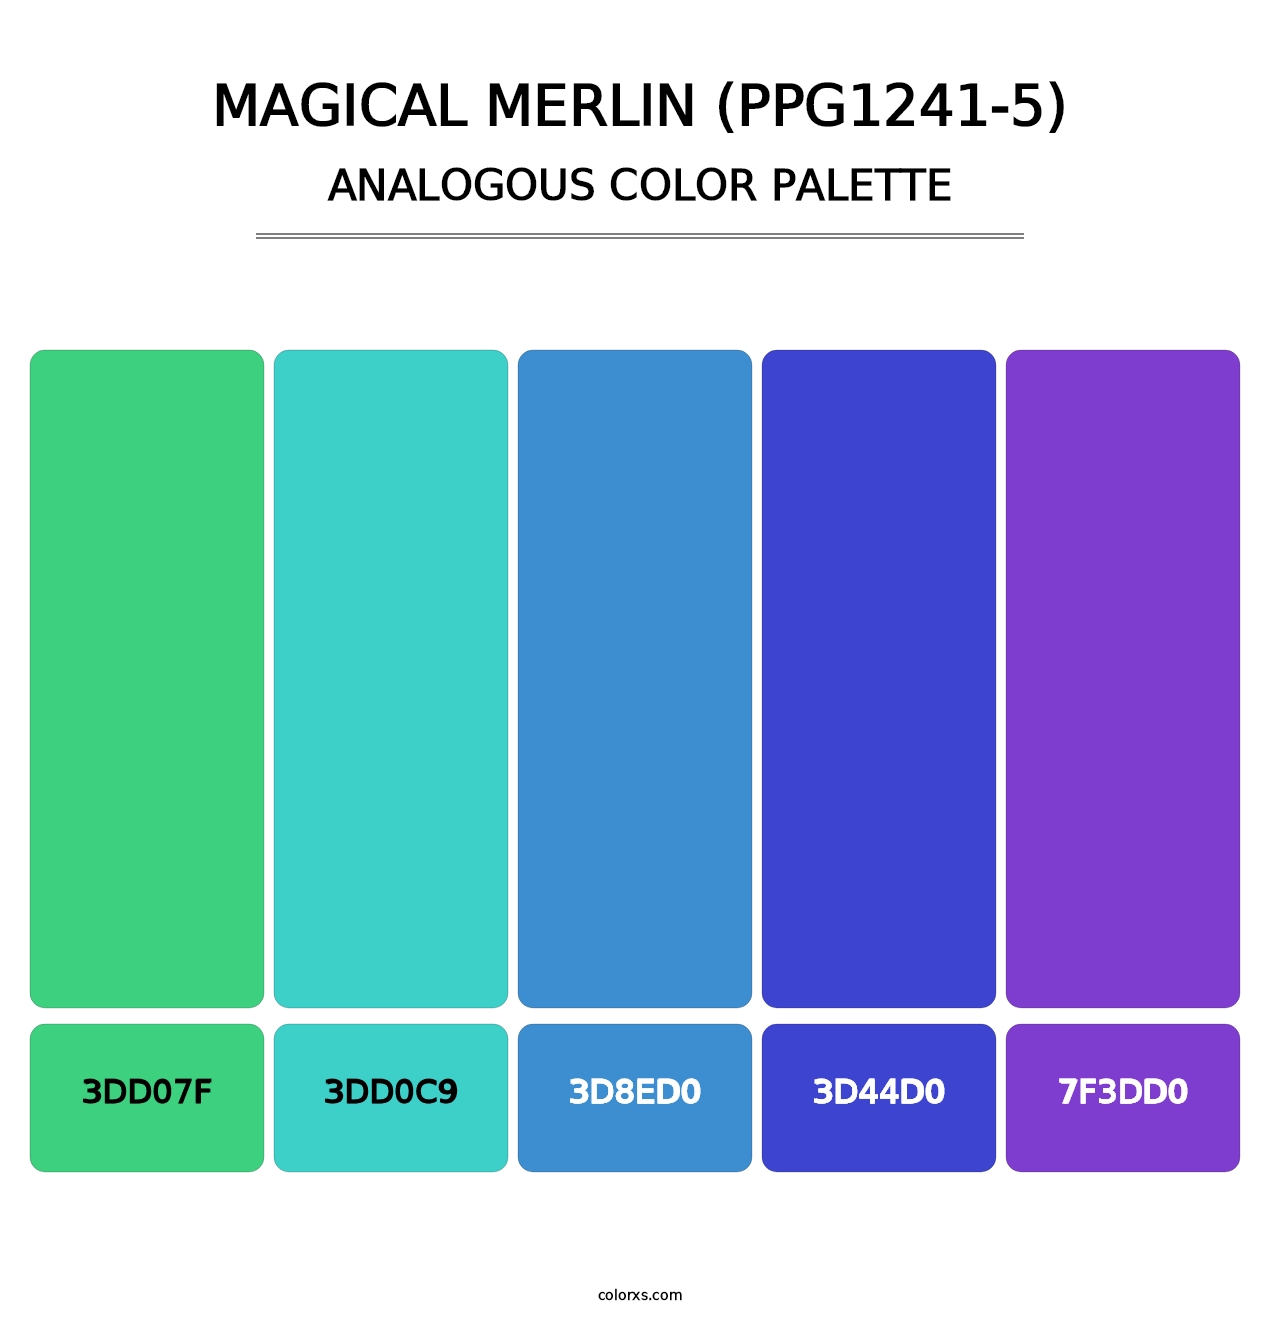 Magical Merlin (PPG1241-5) - Analogous Color Palette